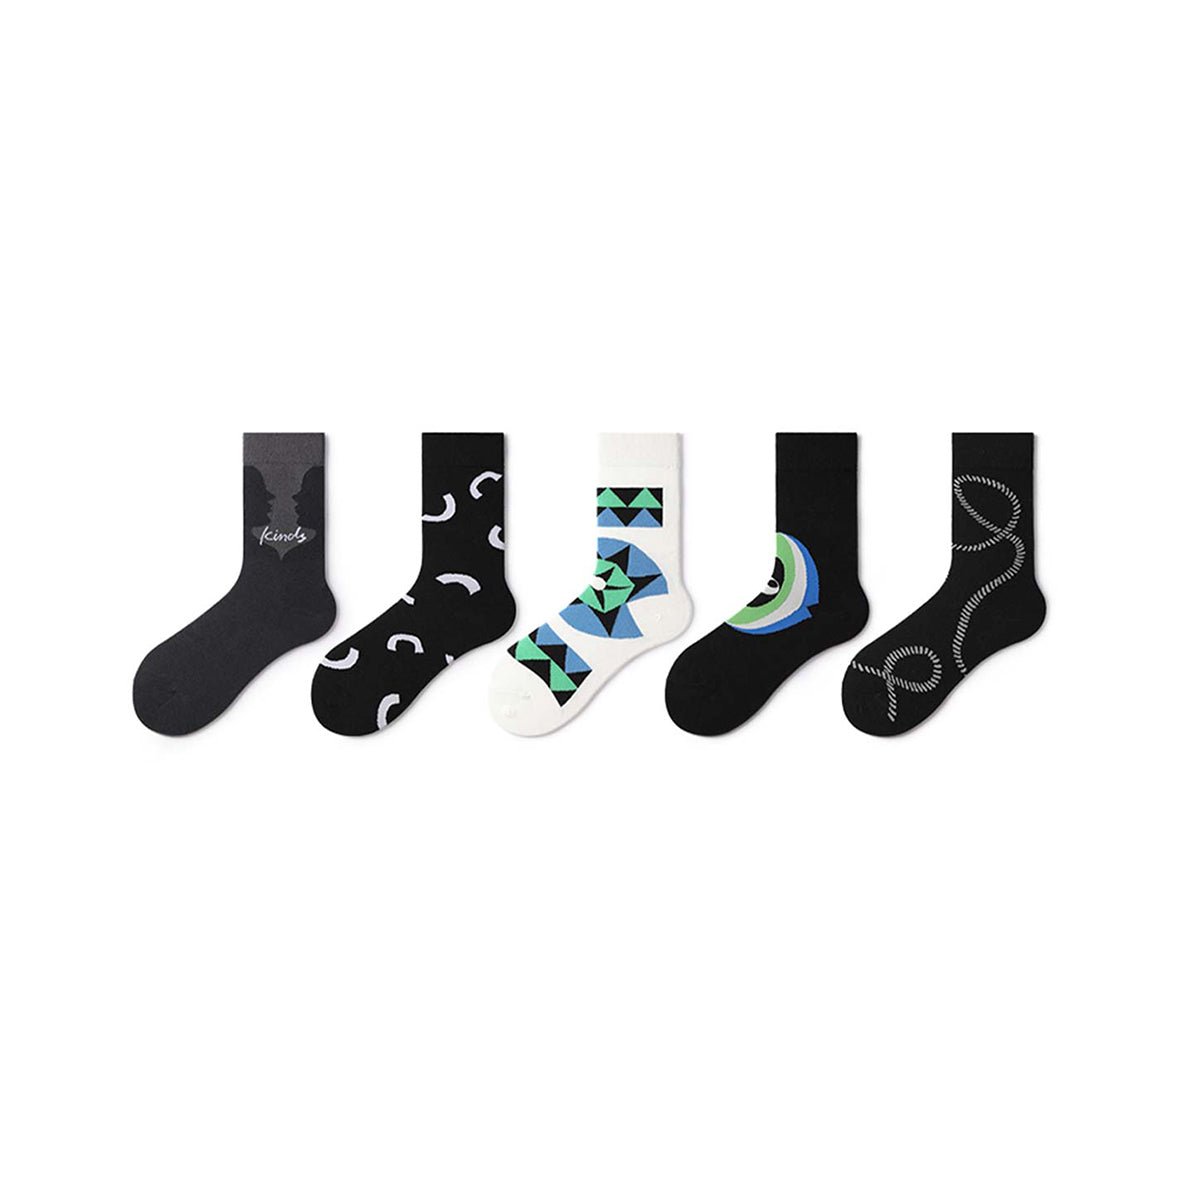 Kinds All-season Unisex 5pcs Crew Socks Set - 0cm